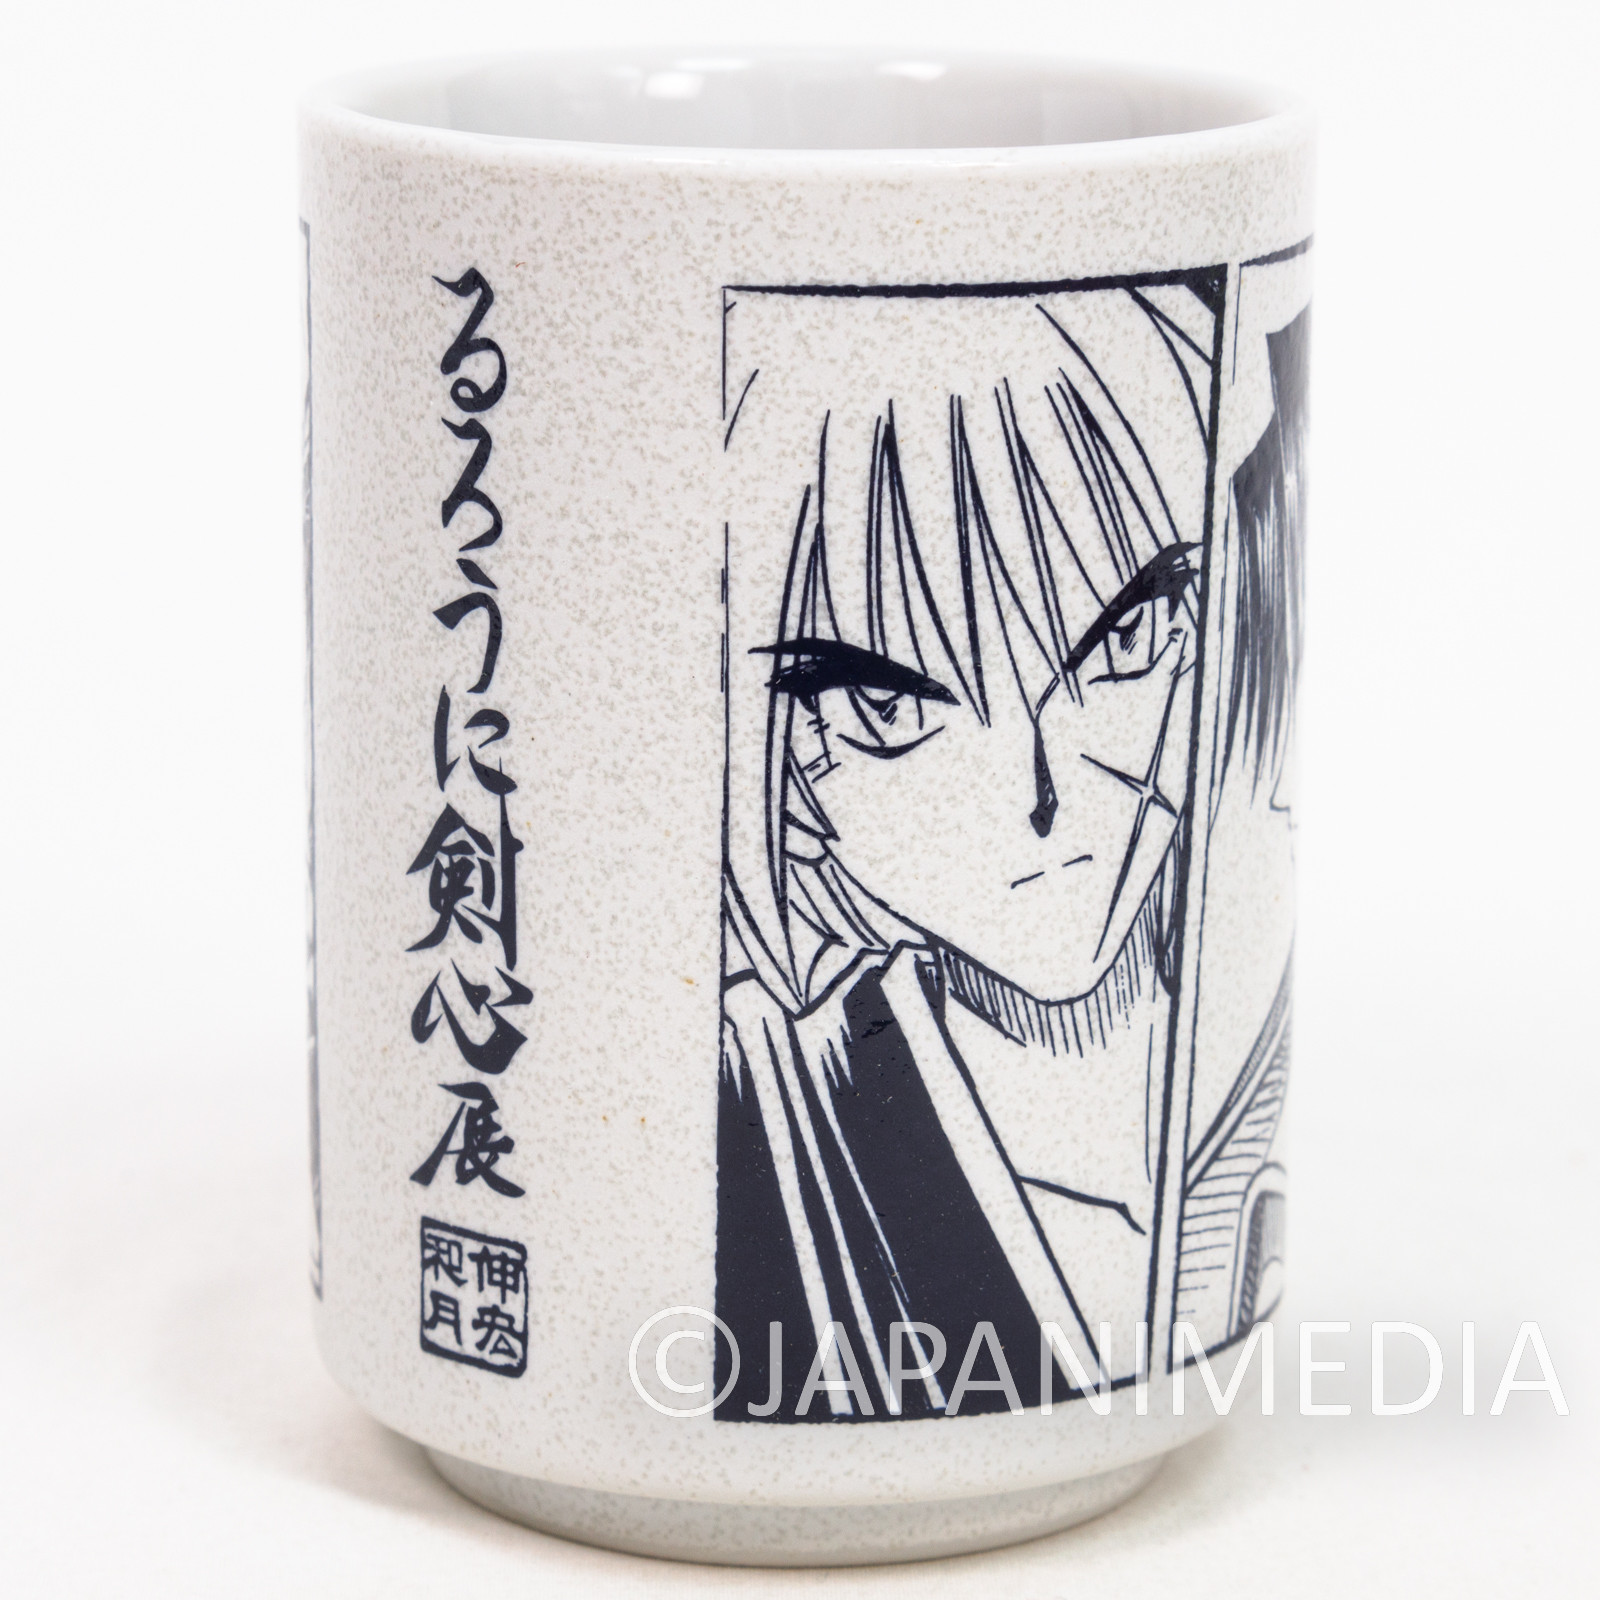 Rurouni Kenshin Japanese Tea Cup Yunomi Shonen Jump JAPAN ANIME MANGA 2